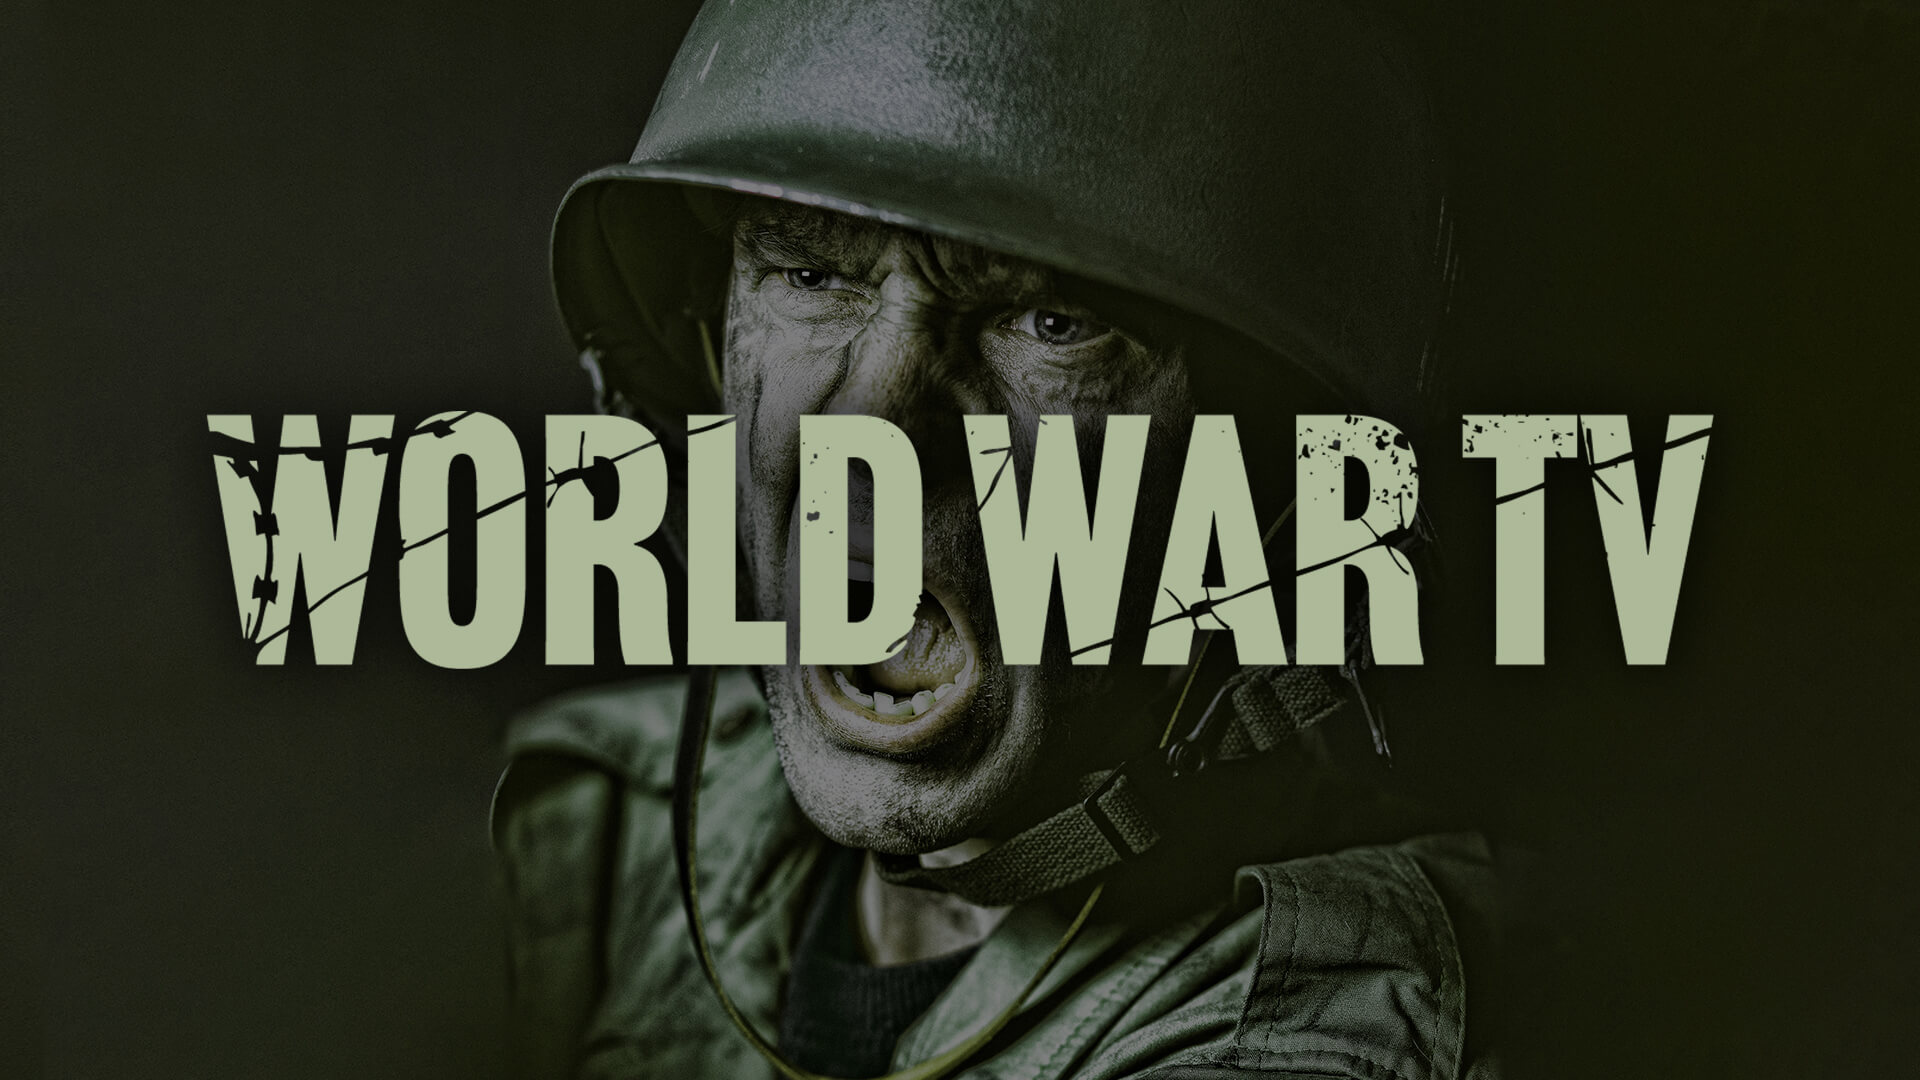 World War TV